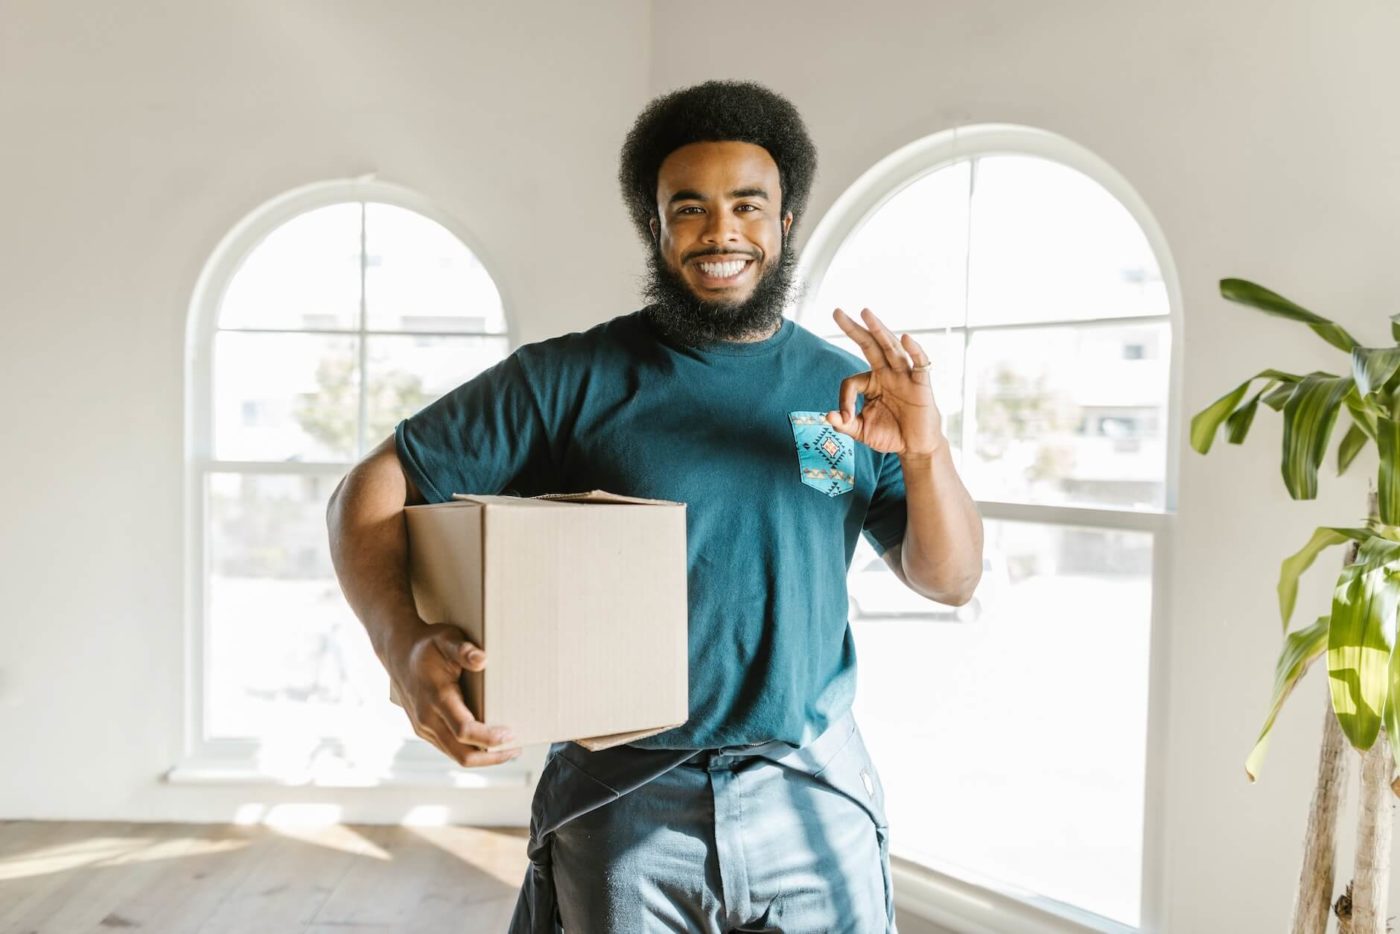 A happy man holding a box